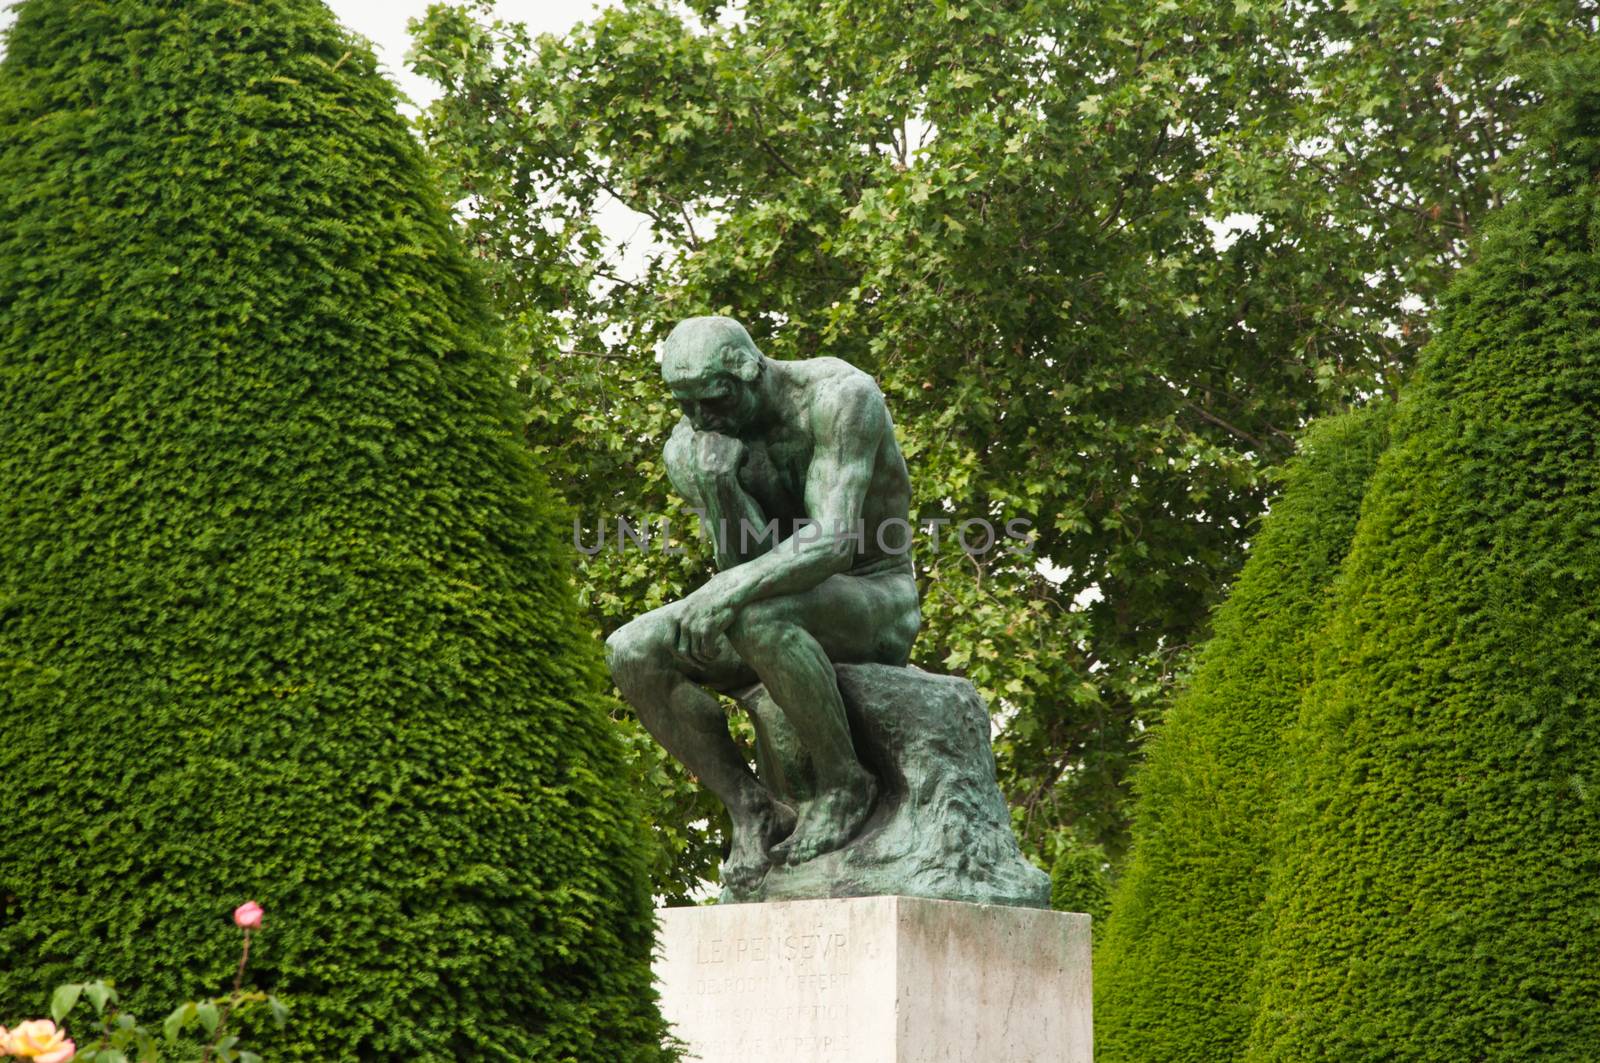 the thinking in Rodin museum in Paris - taken 14 June 2013 by NeydtStock